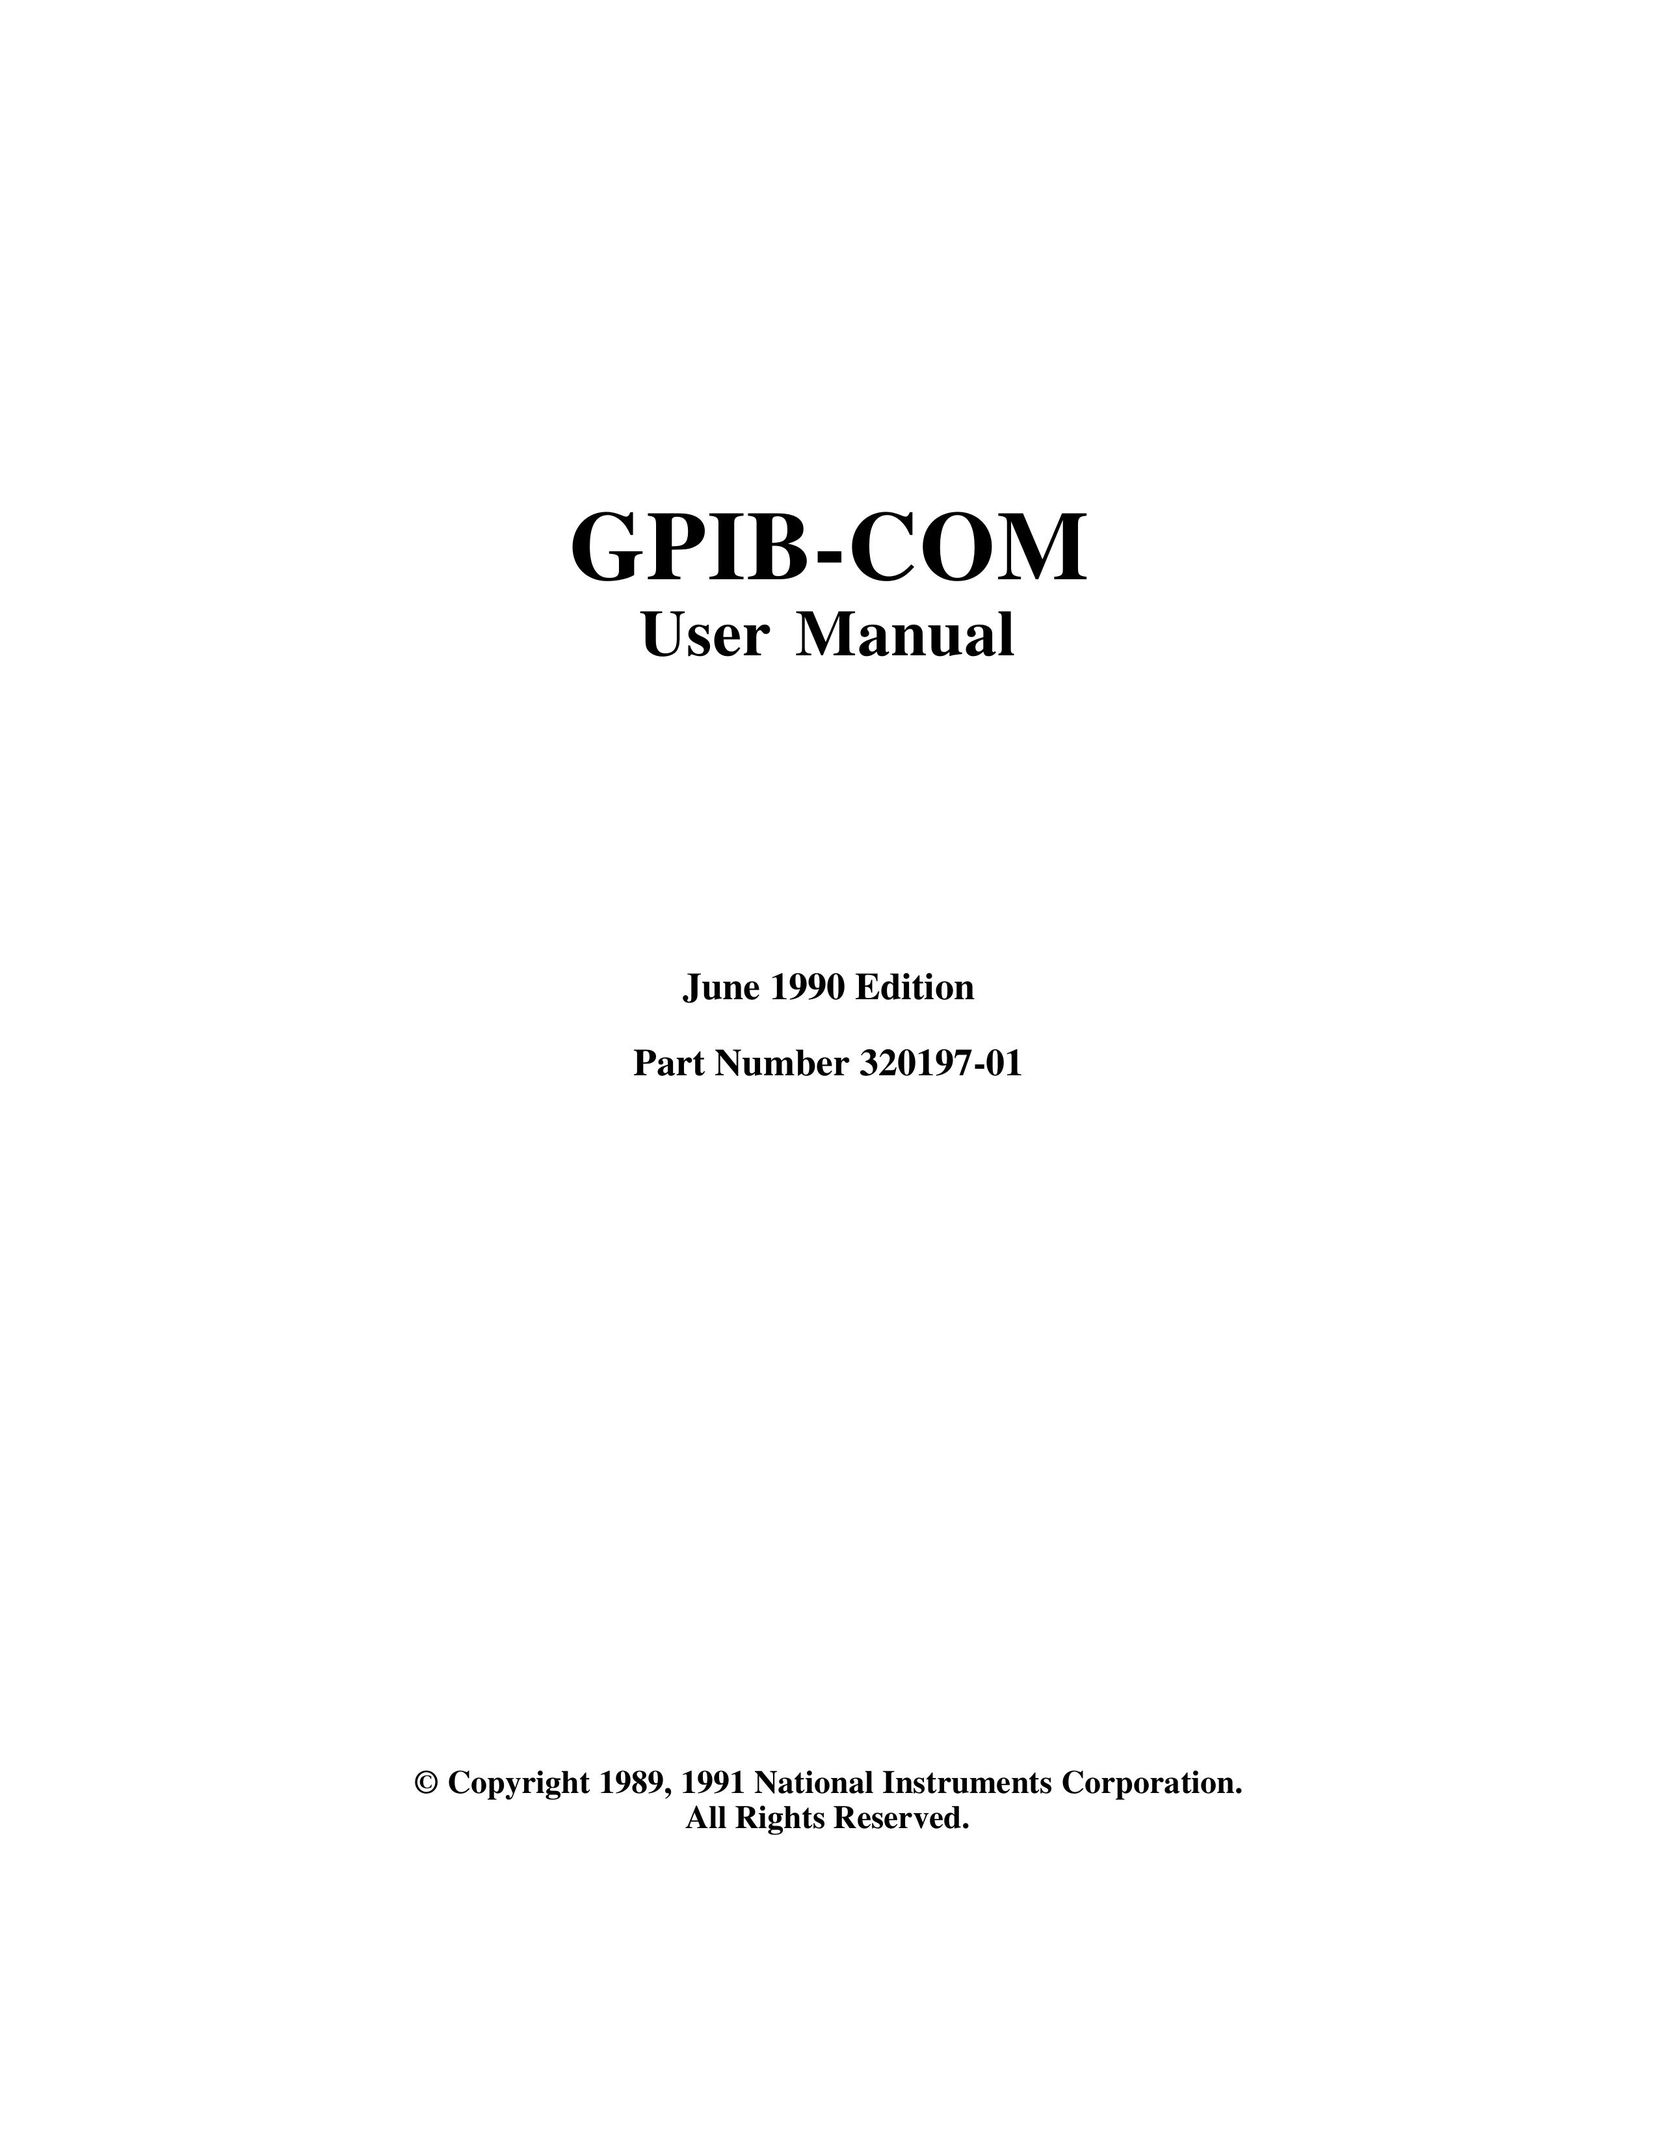 National Instruments GPIB-COM Switch User Manual